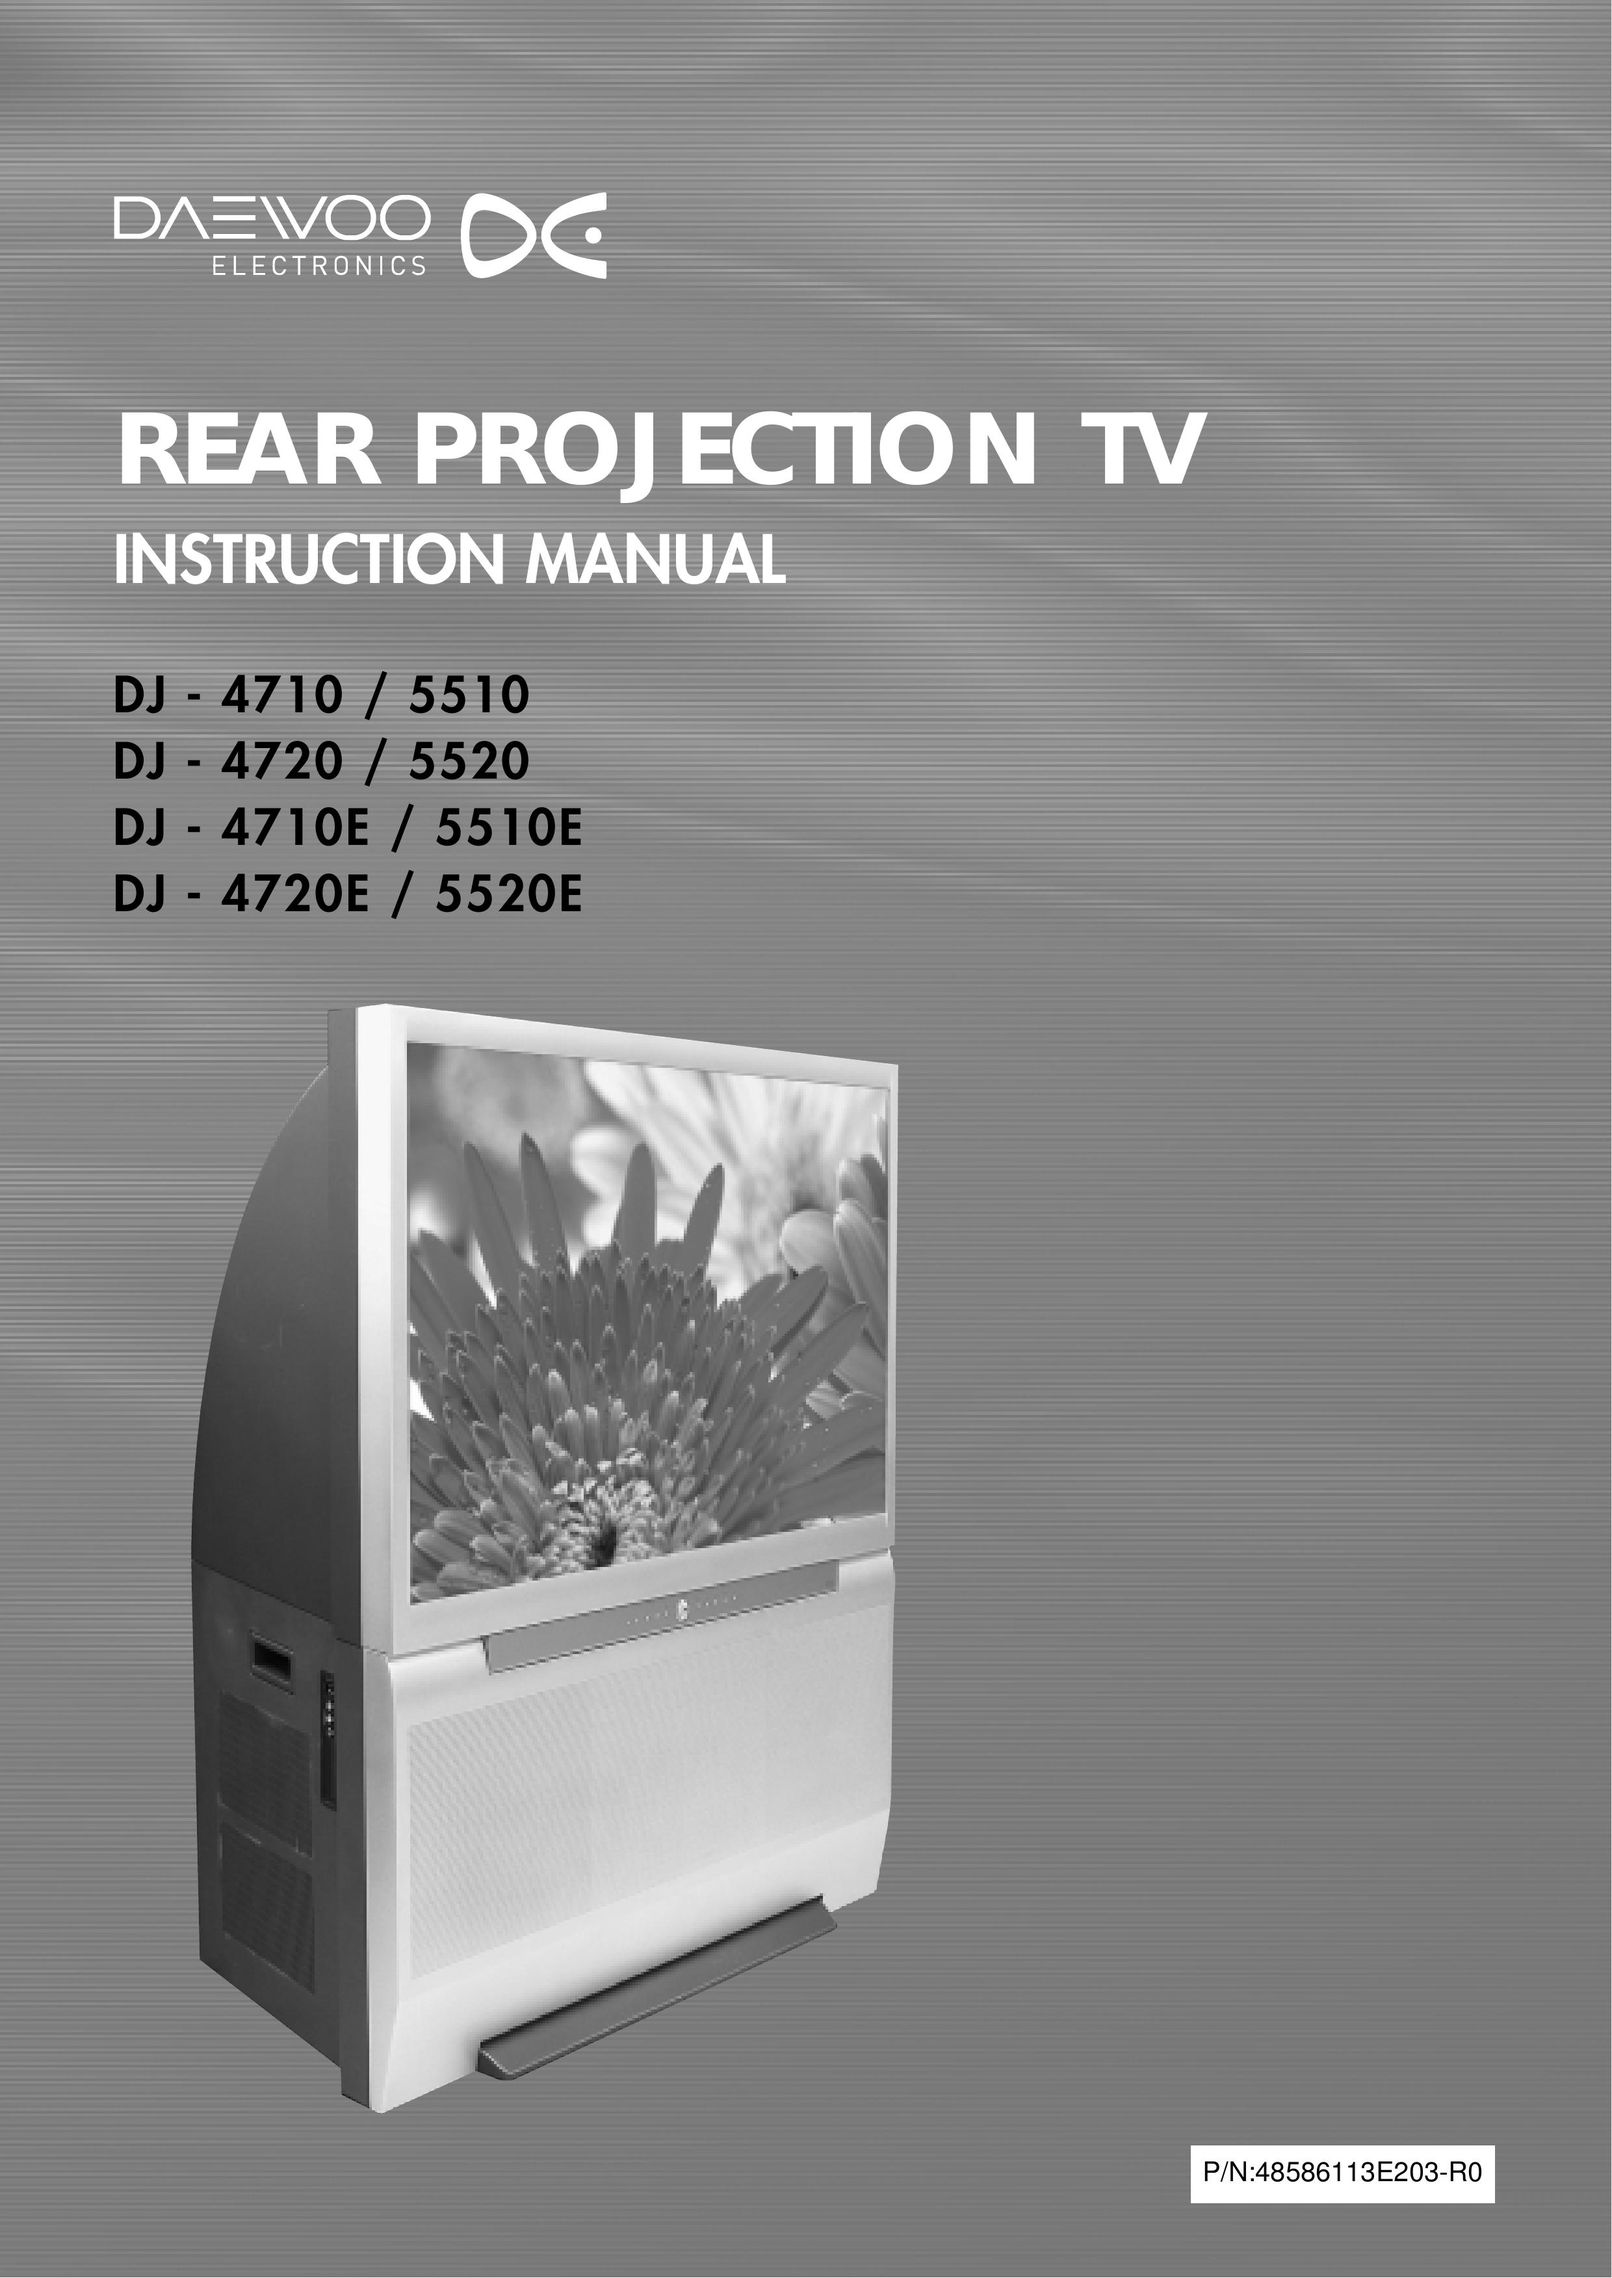 Daewoo DJ - 4720, DJ - 5520, DJ - 4710, DJ - 5510, DJ - 4710E, DJ - 5510E, DJ - 4720E, DJ - 5520E Projection Television User Manual